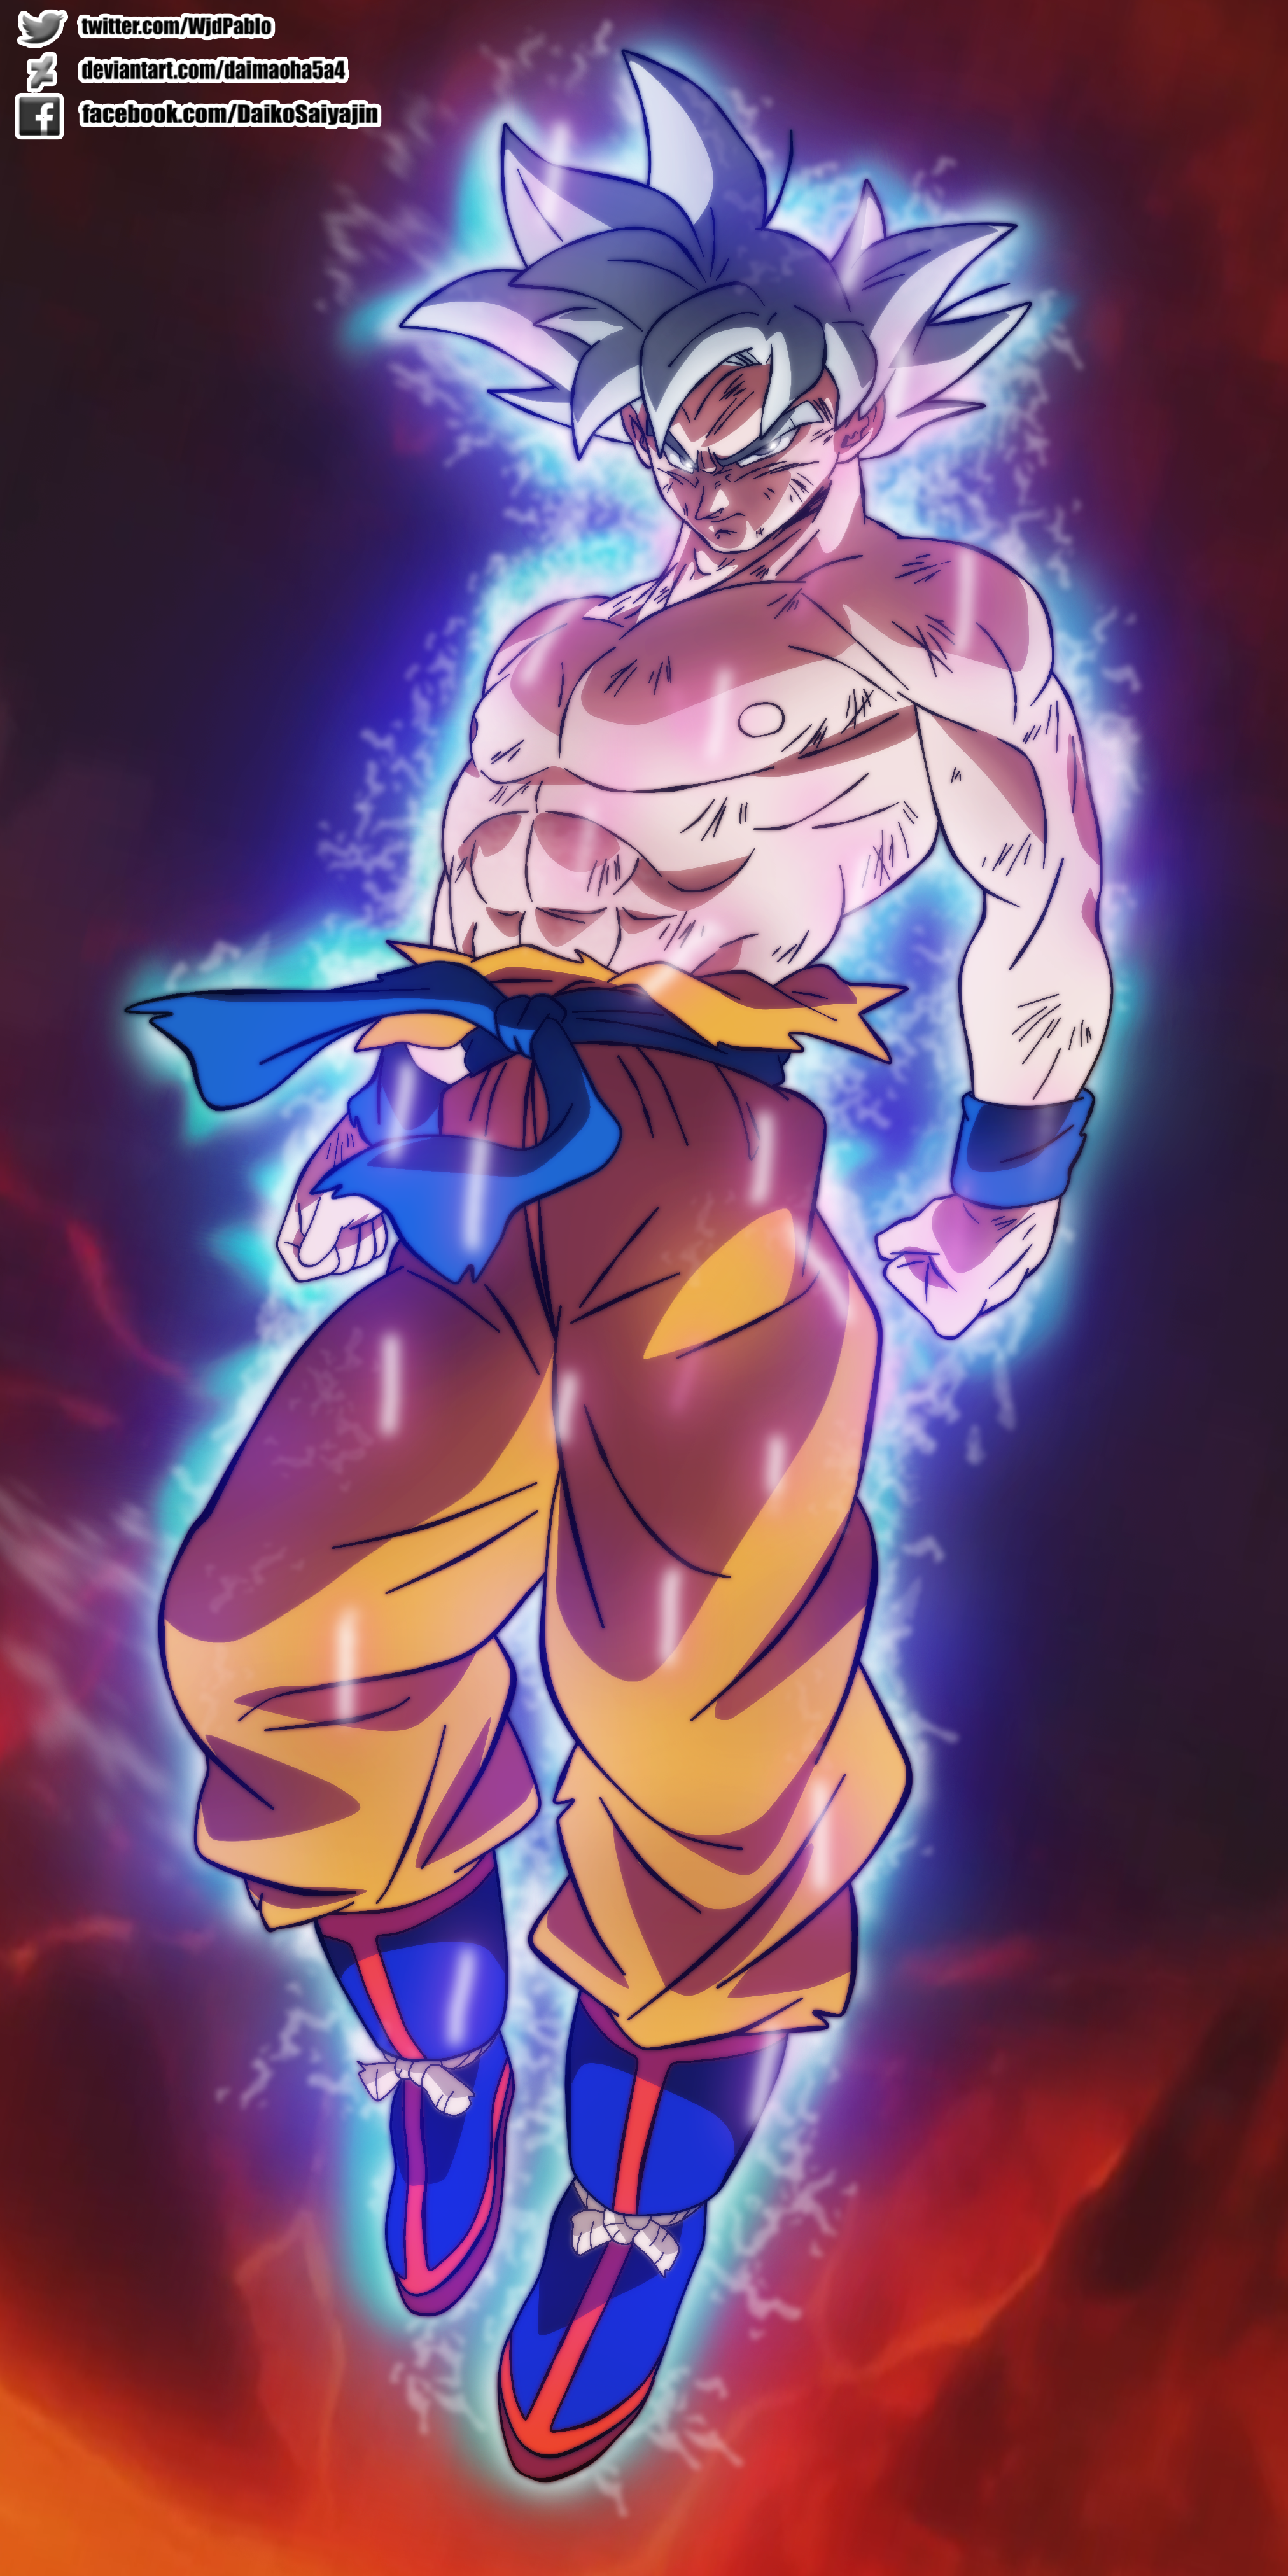 Goku ssj4 in Dragon Ball Gt style by daimaoha5a4 on DeviantArt